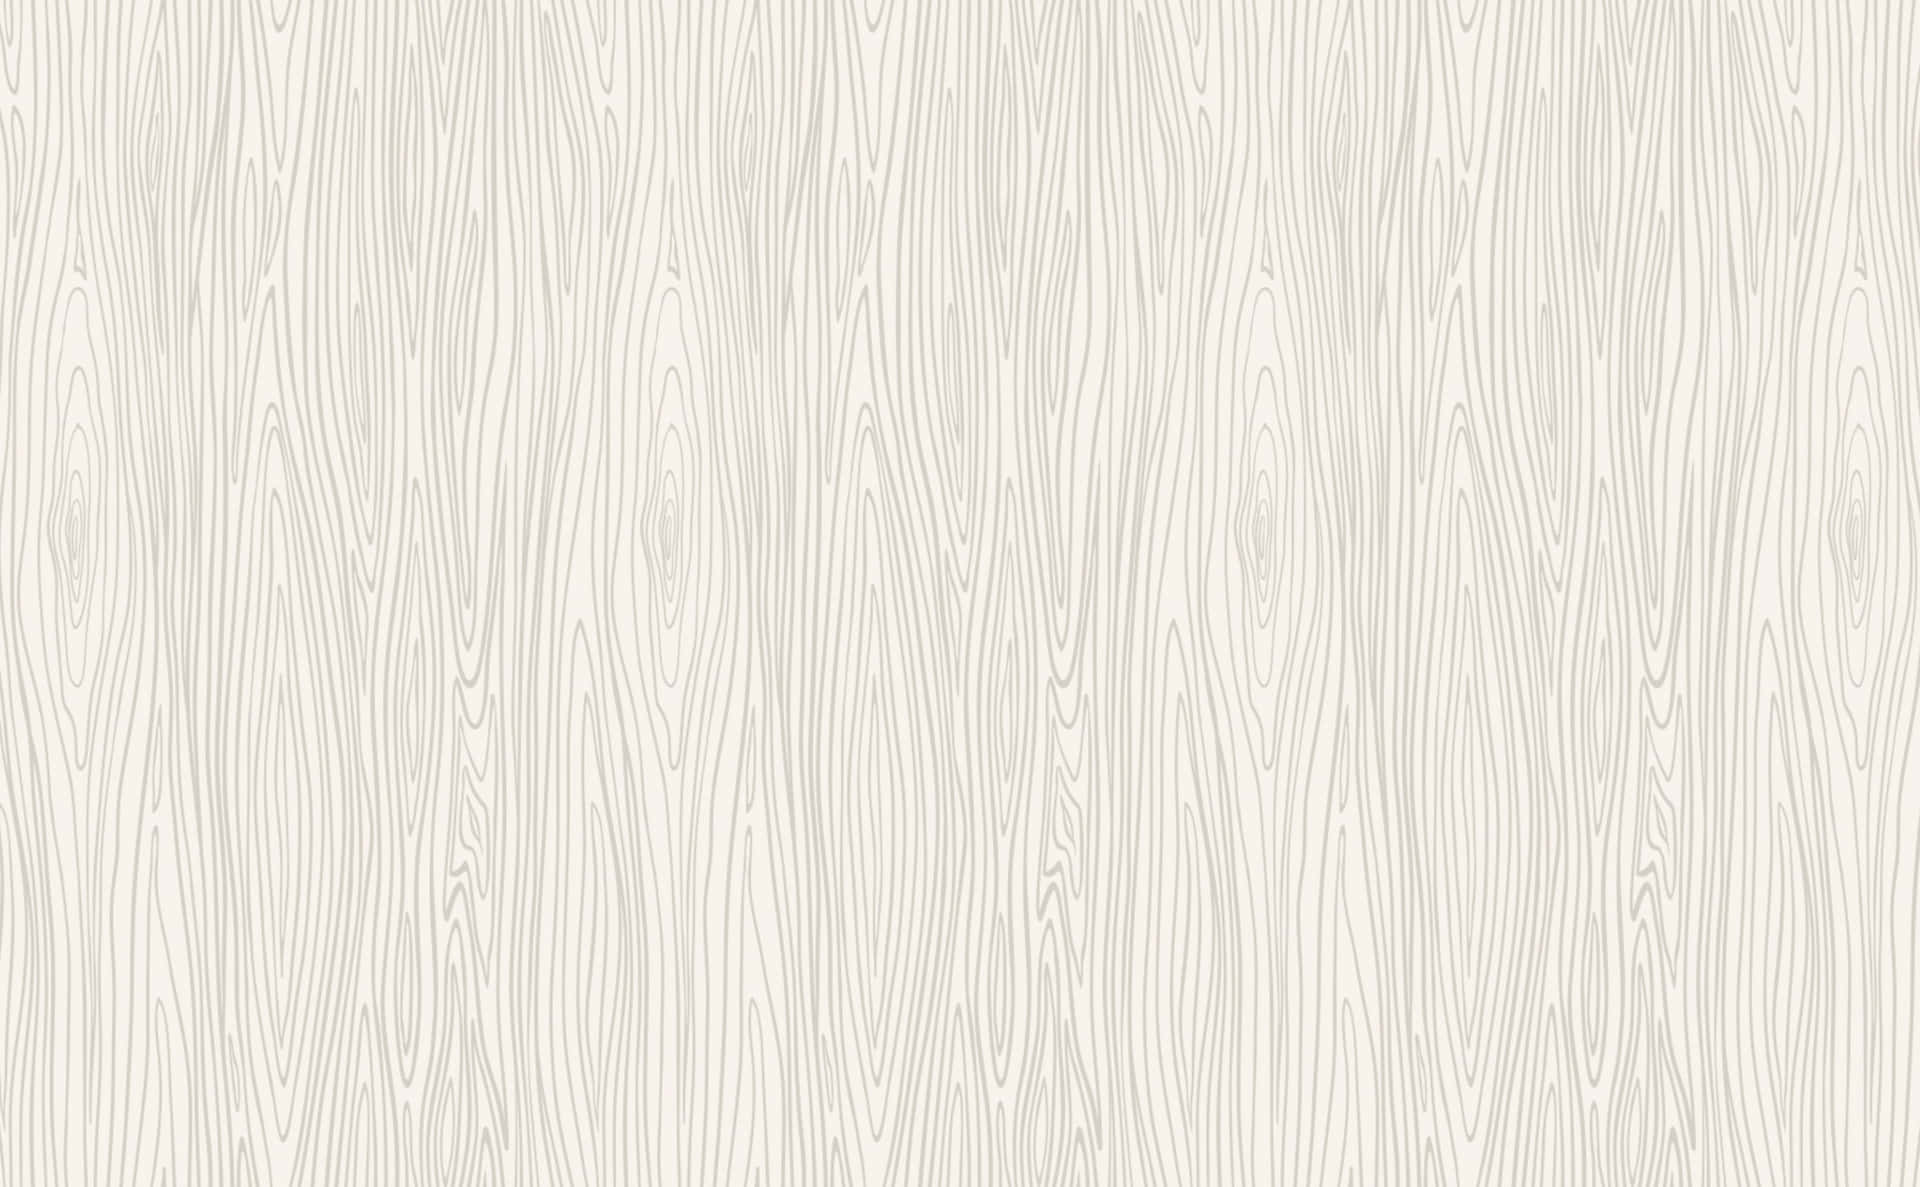 Pristine White Wood Background